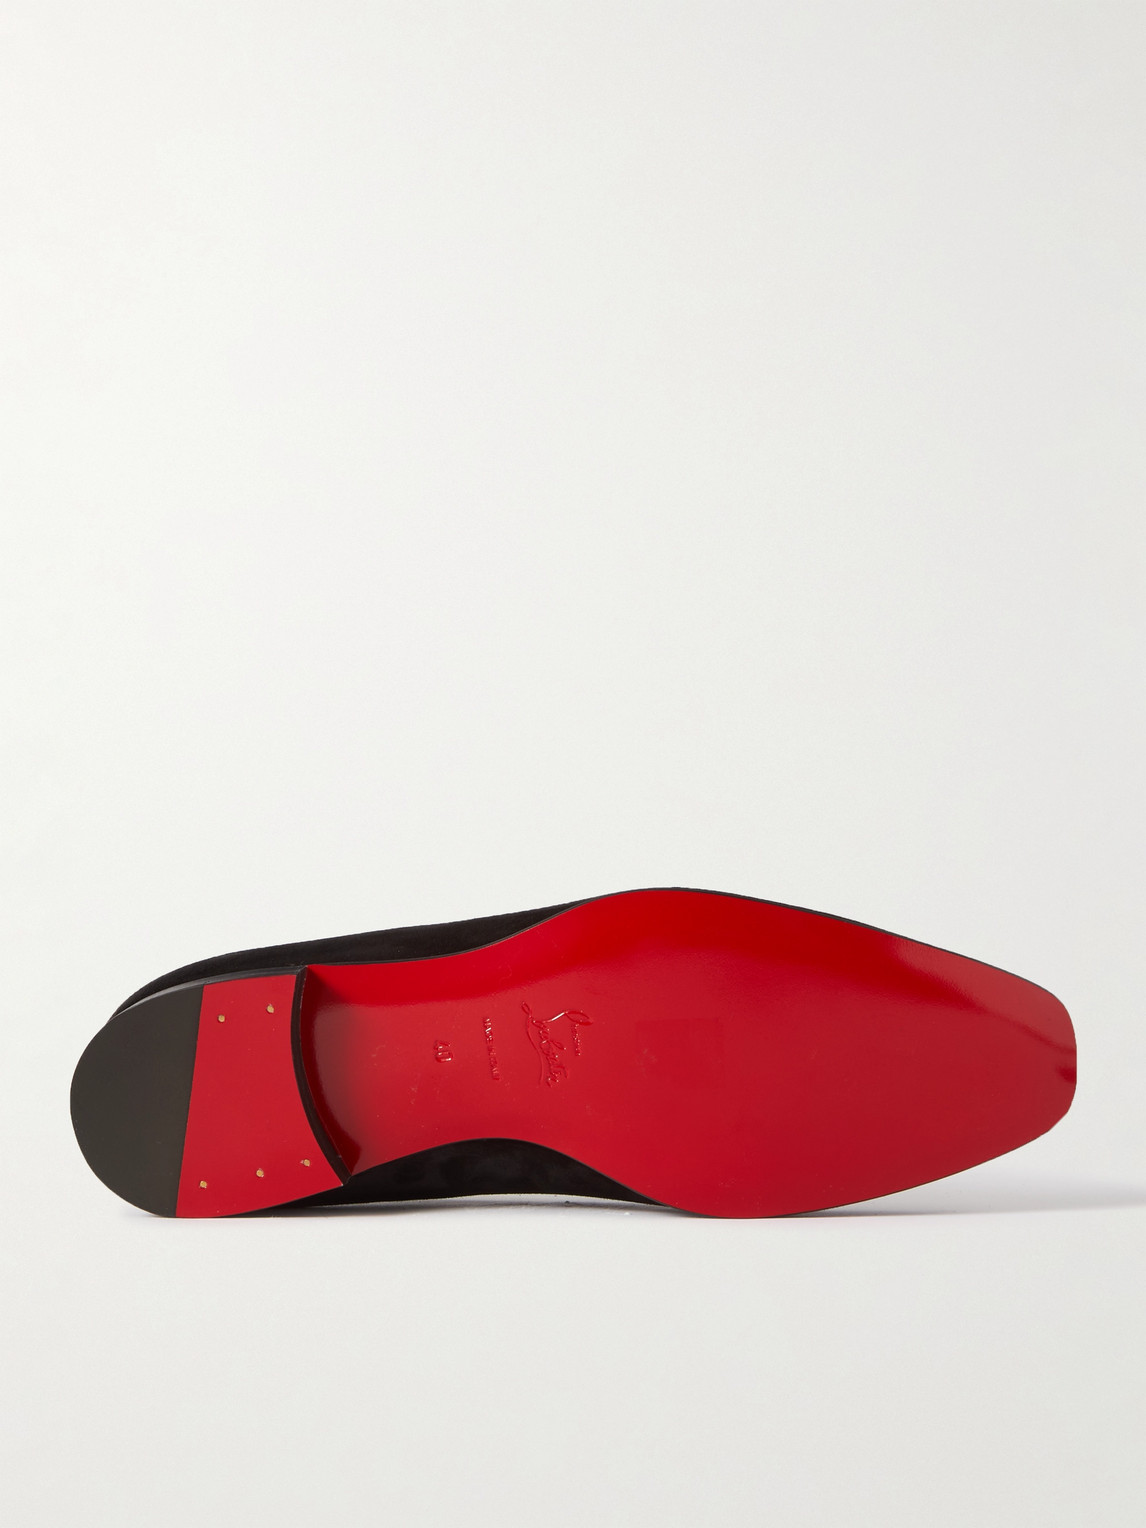 Shop Christian Louboutin Dandelion Grosgrain-trimmed Suede Loafers In Black